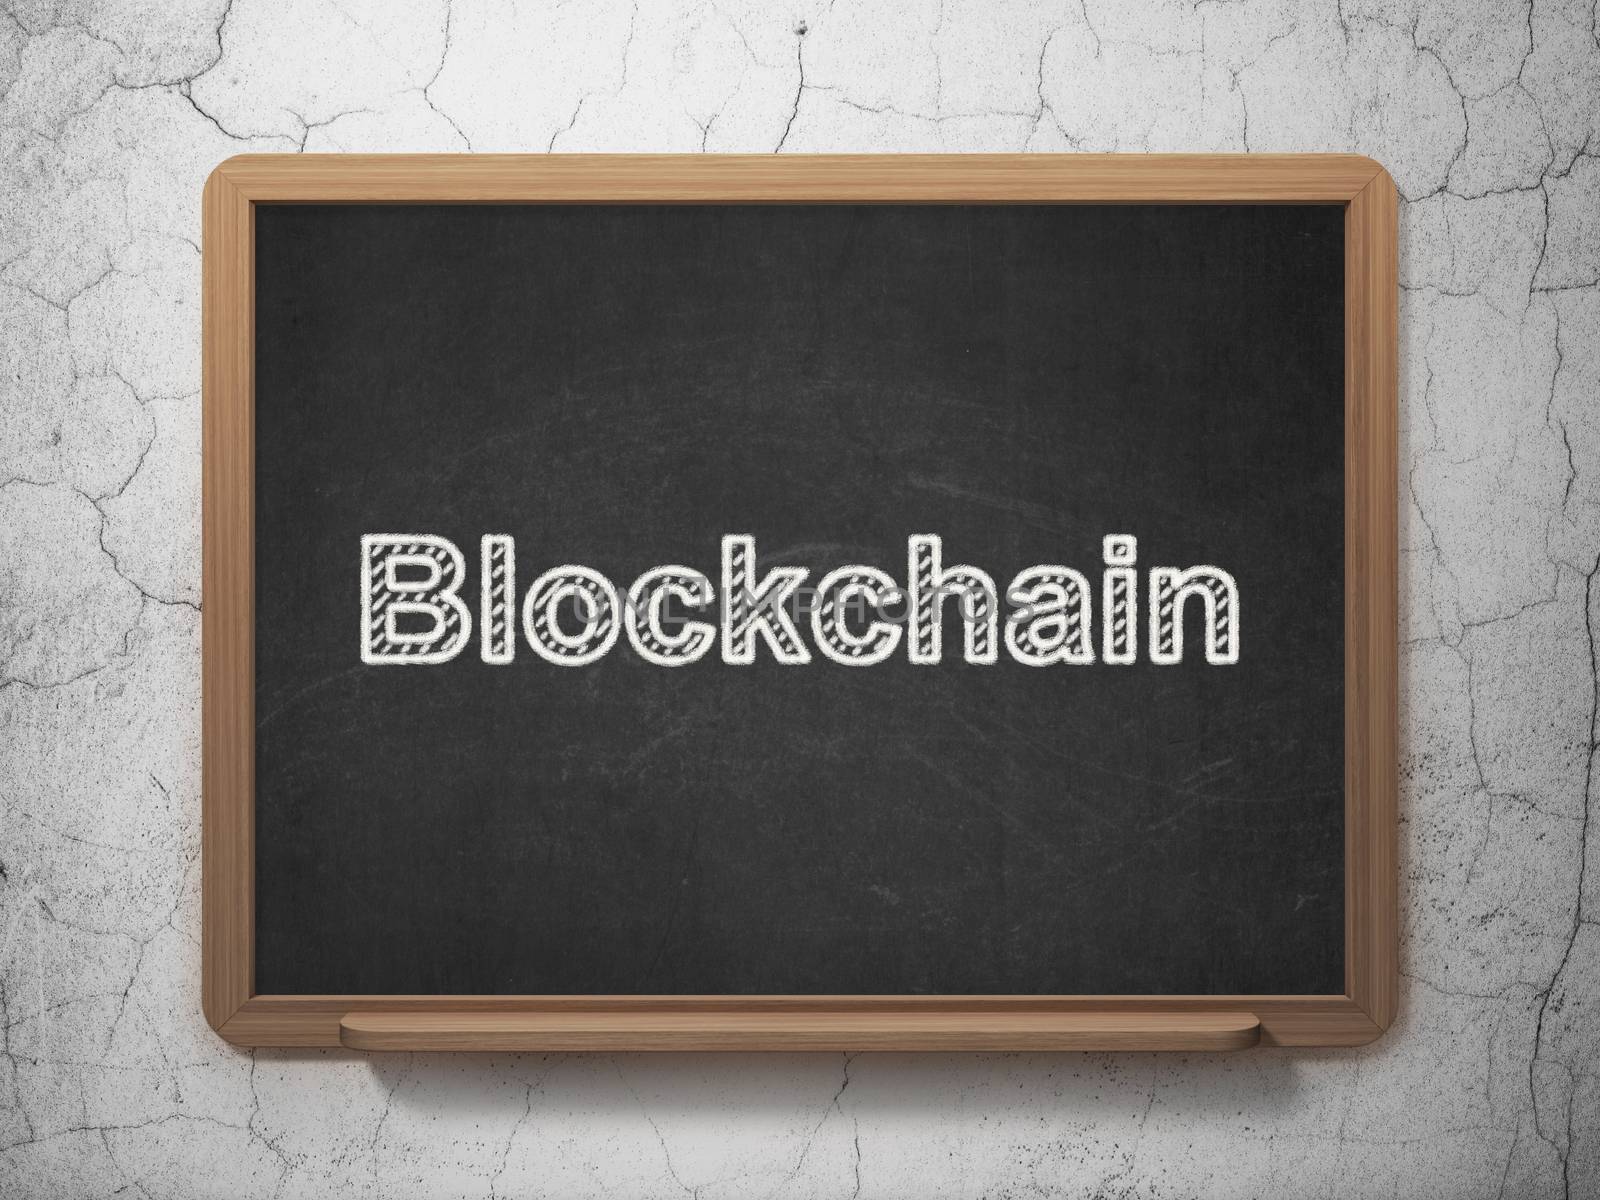 Banking concept: Blockchain on chalkboard background by maxkabakov